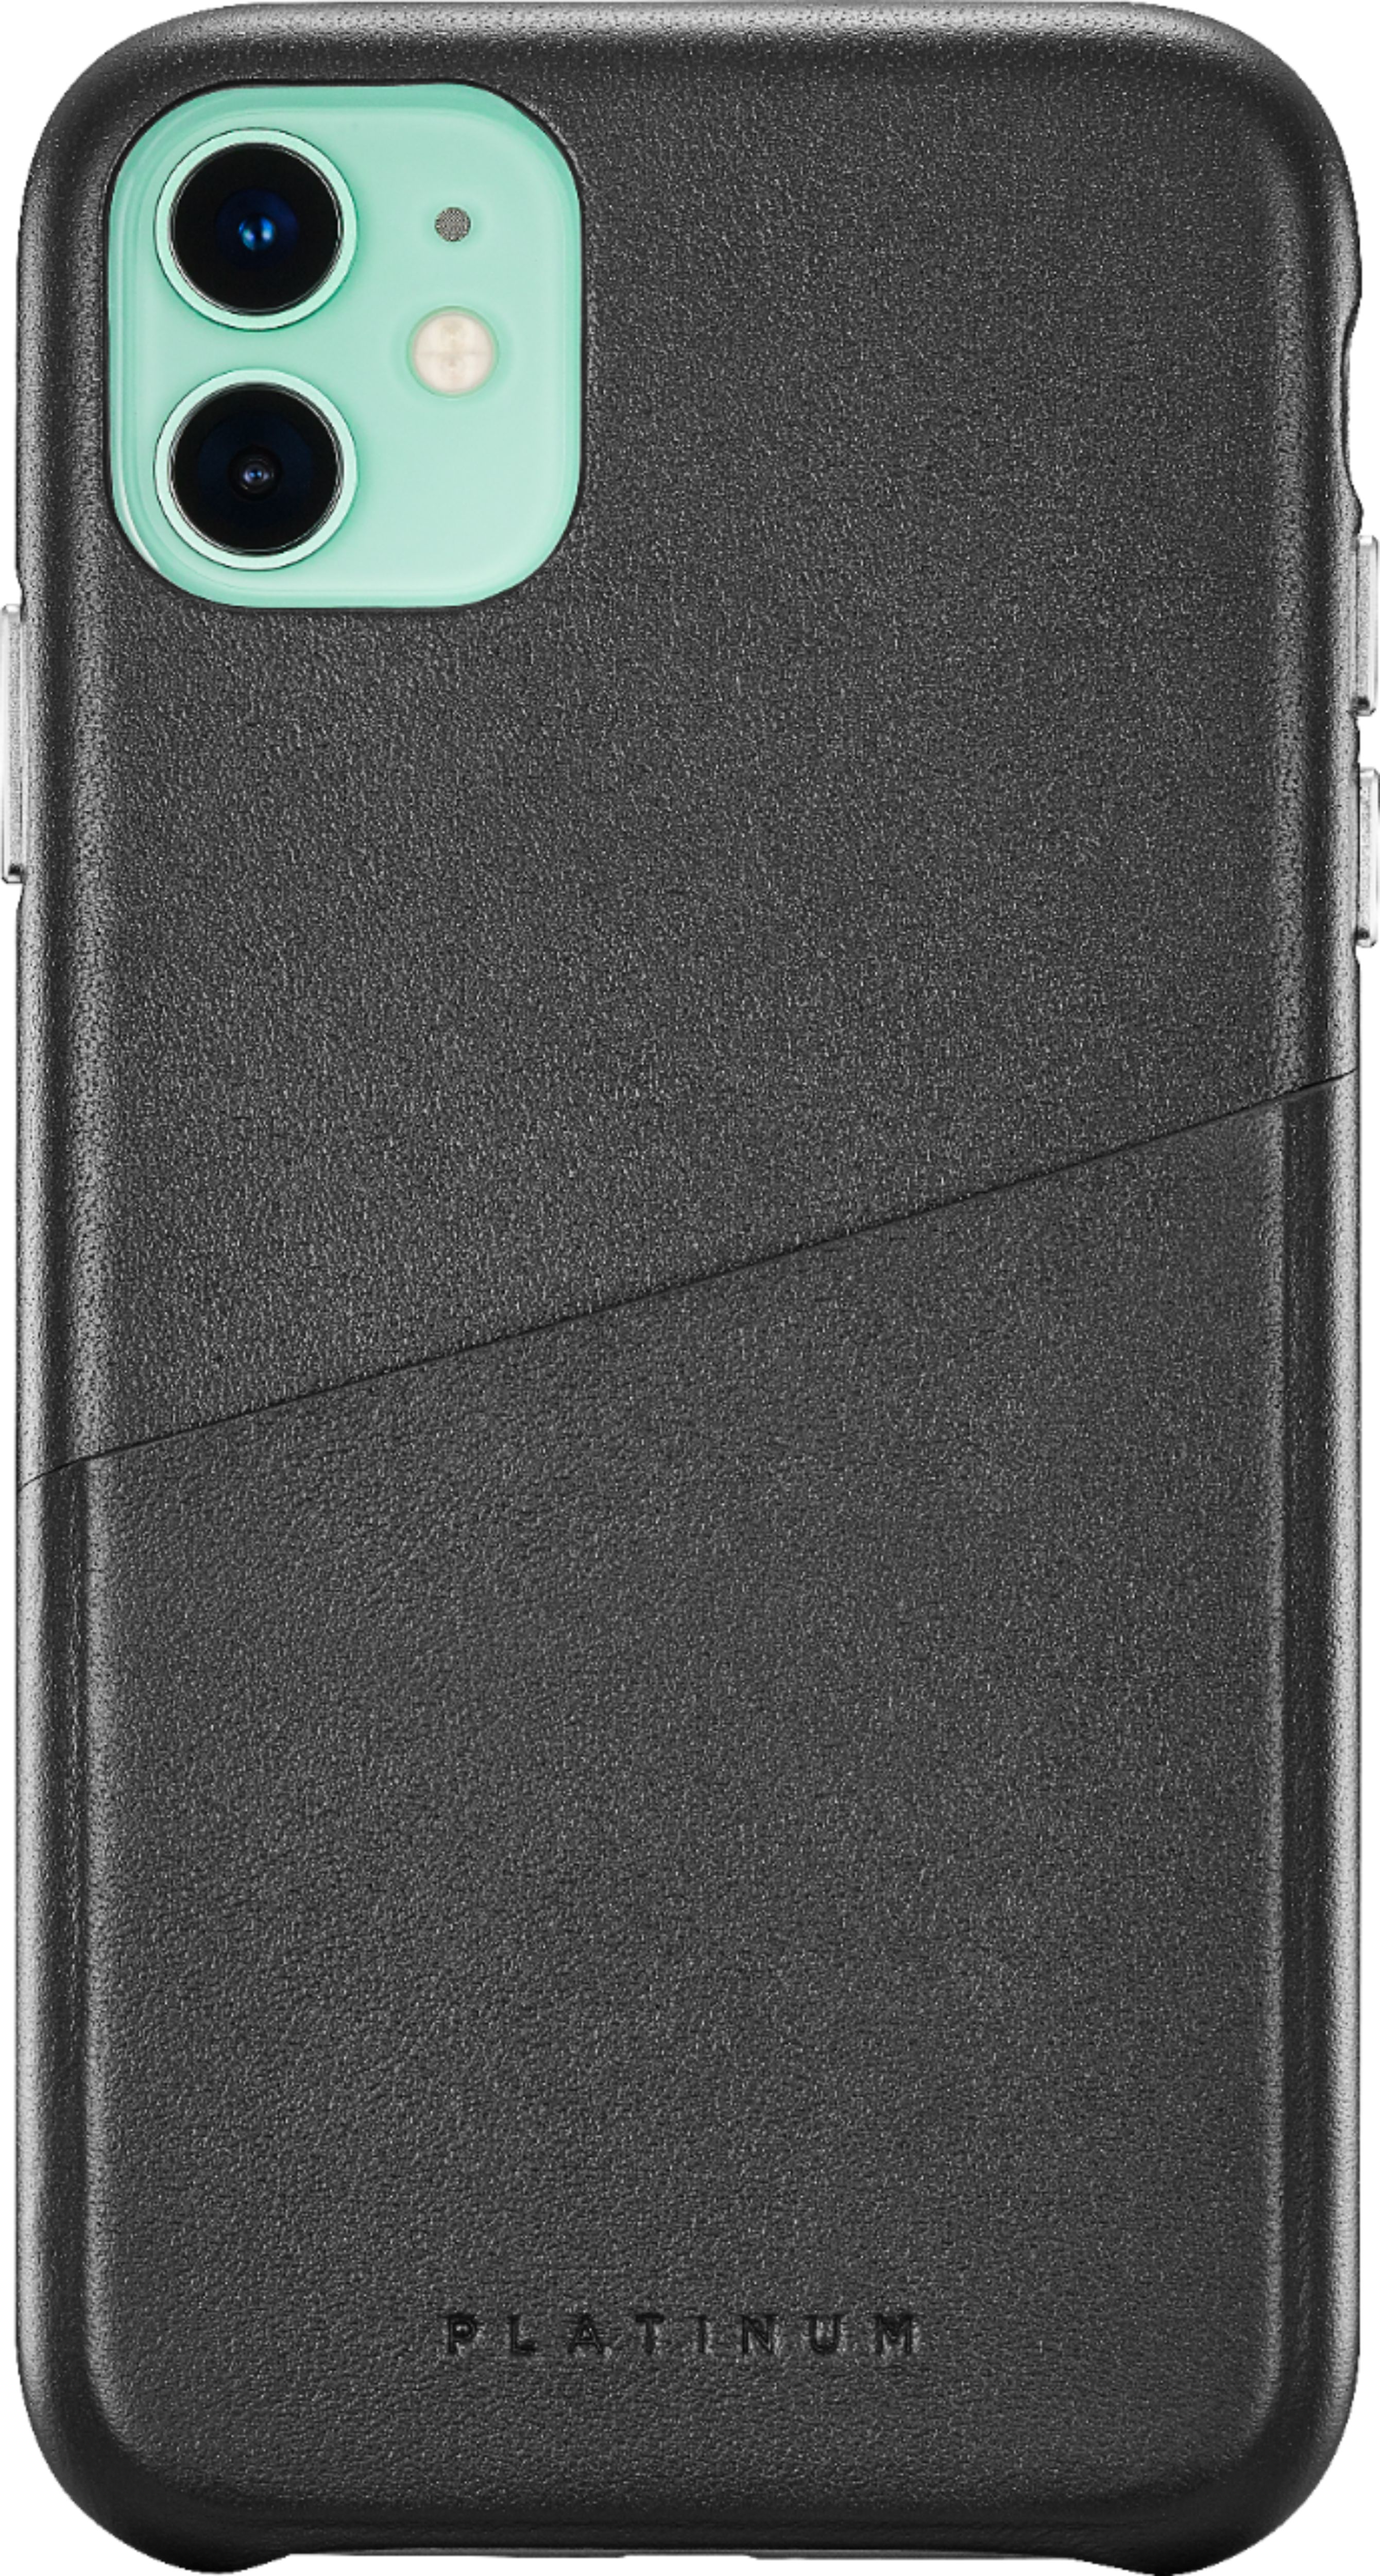 Platinum™ - Leather Wallet Case for Apple® iPhone® 11 - Black